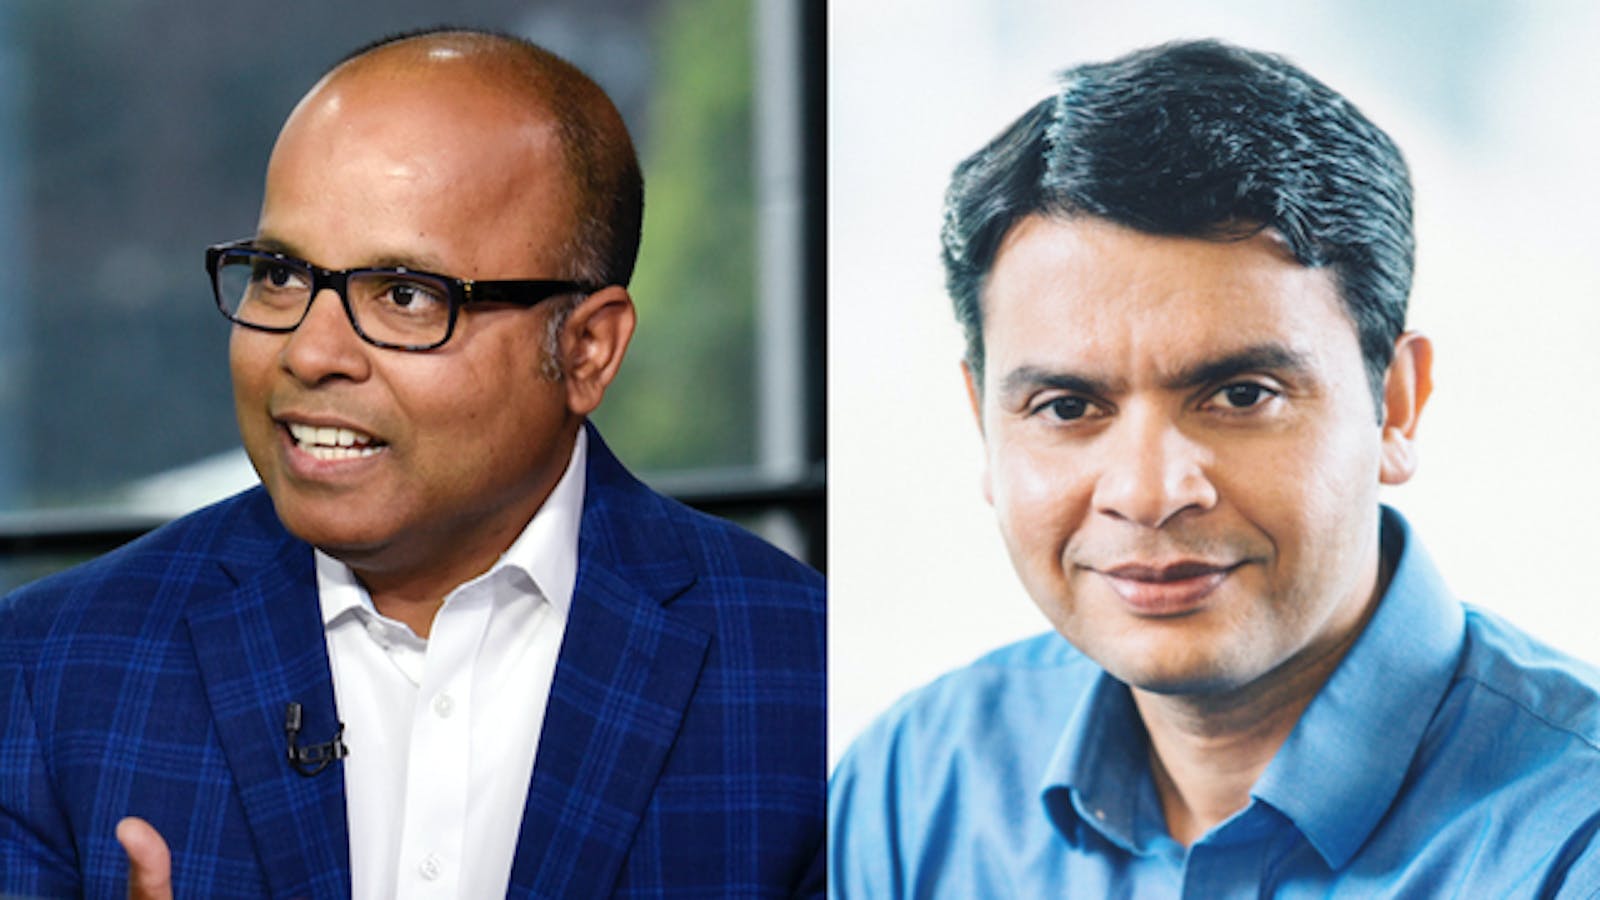 Rubrik CEO Bipul Sinha and Cohesity CEO Mohit Aron. Photos by Bloomberg (Sinha), Cohesity (Aron)